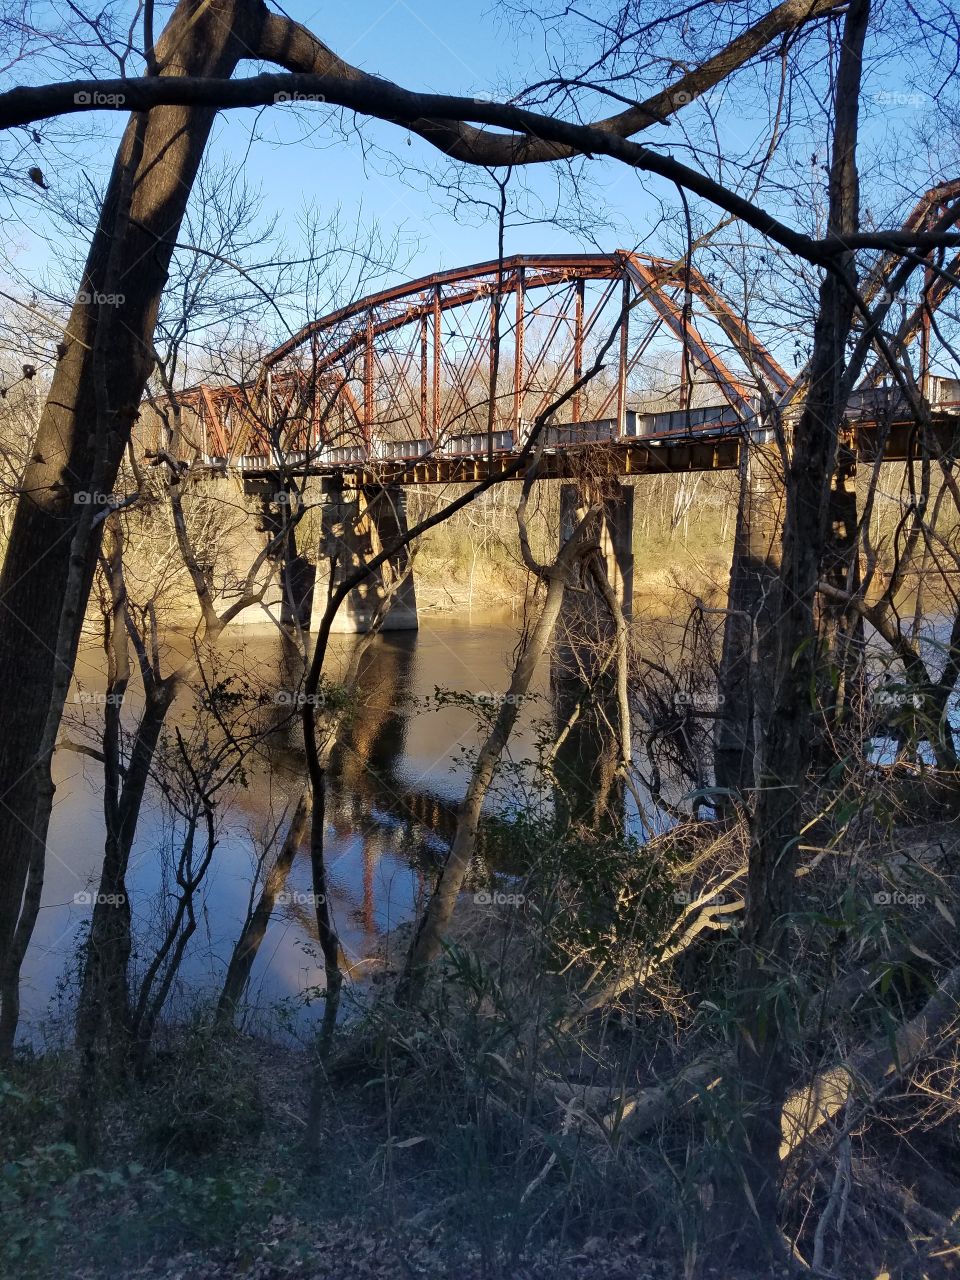 Railroad crossing Cape Fear River in the North Carolina woods